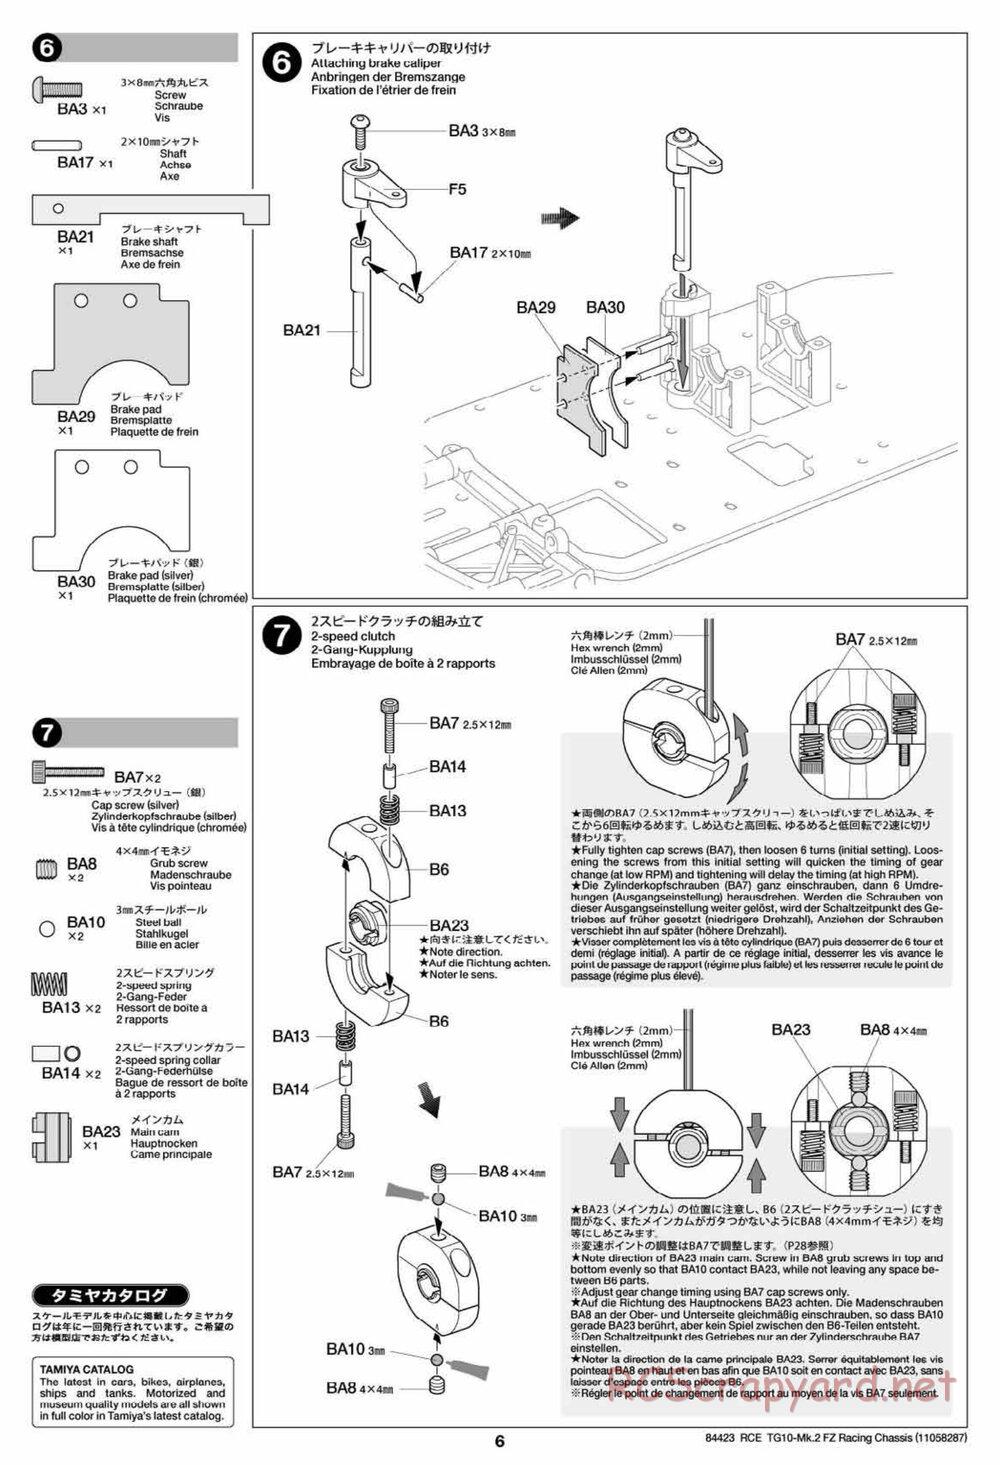 Tamiya - TG10 Mk.2 FZ Racing Chassis - Manual - Page 6